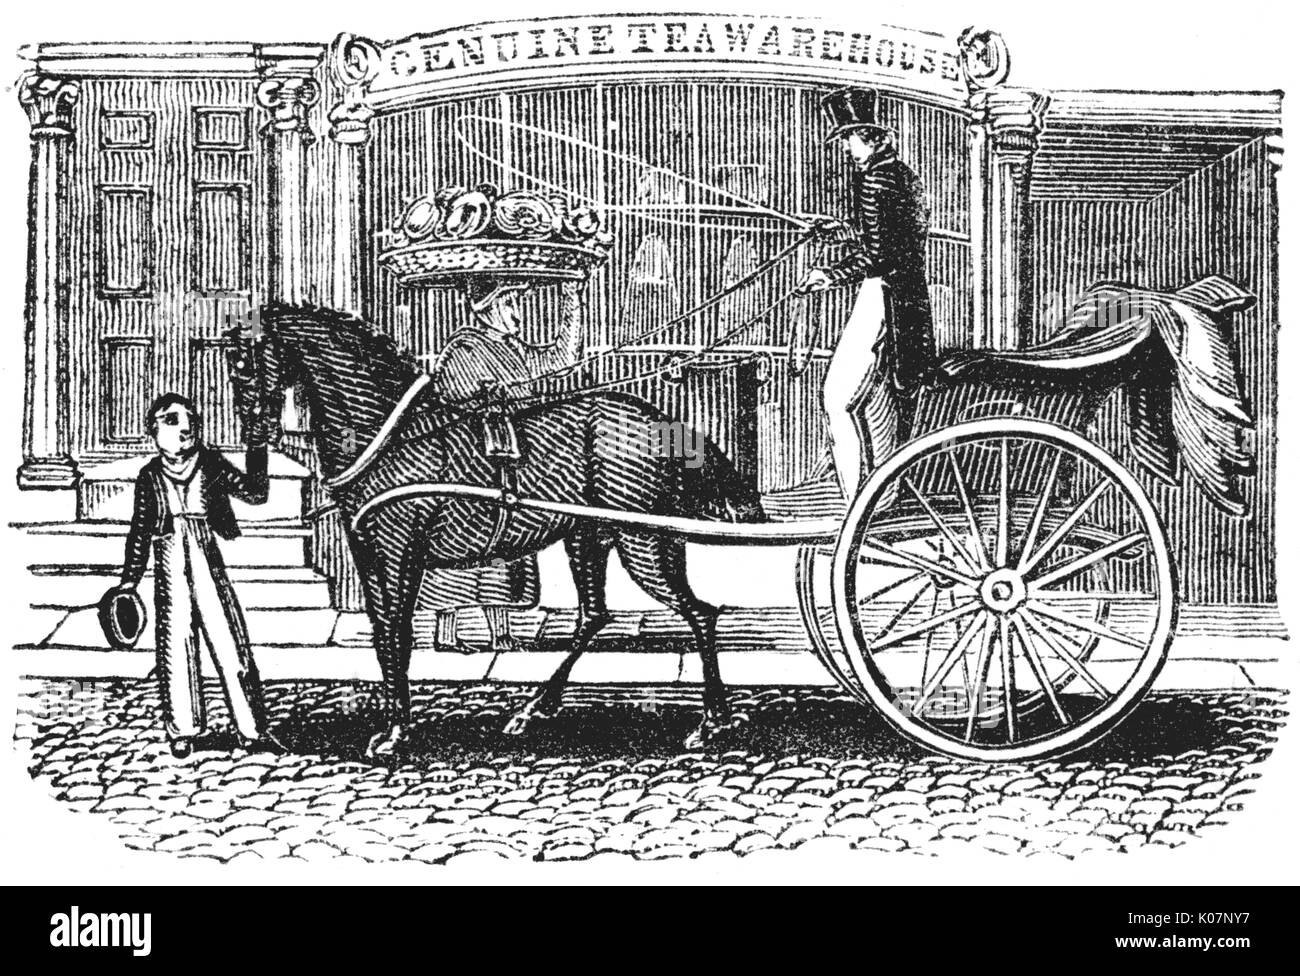 Horse-drawn gig outside tea warehouse, c.1800 Stock Photo